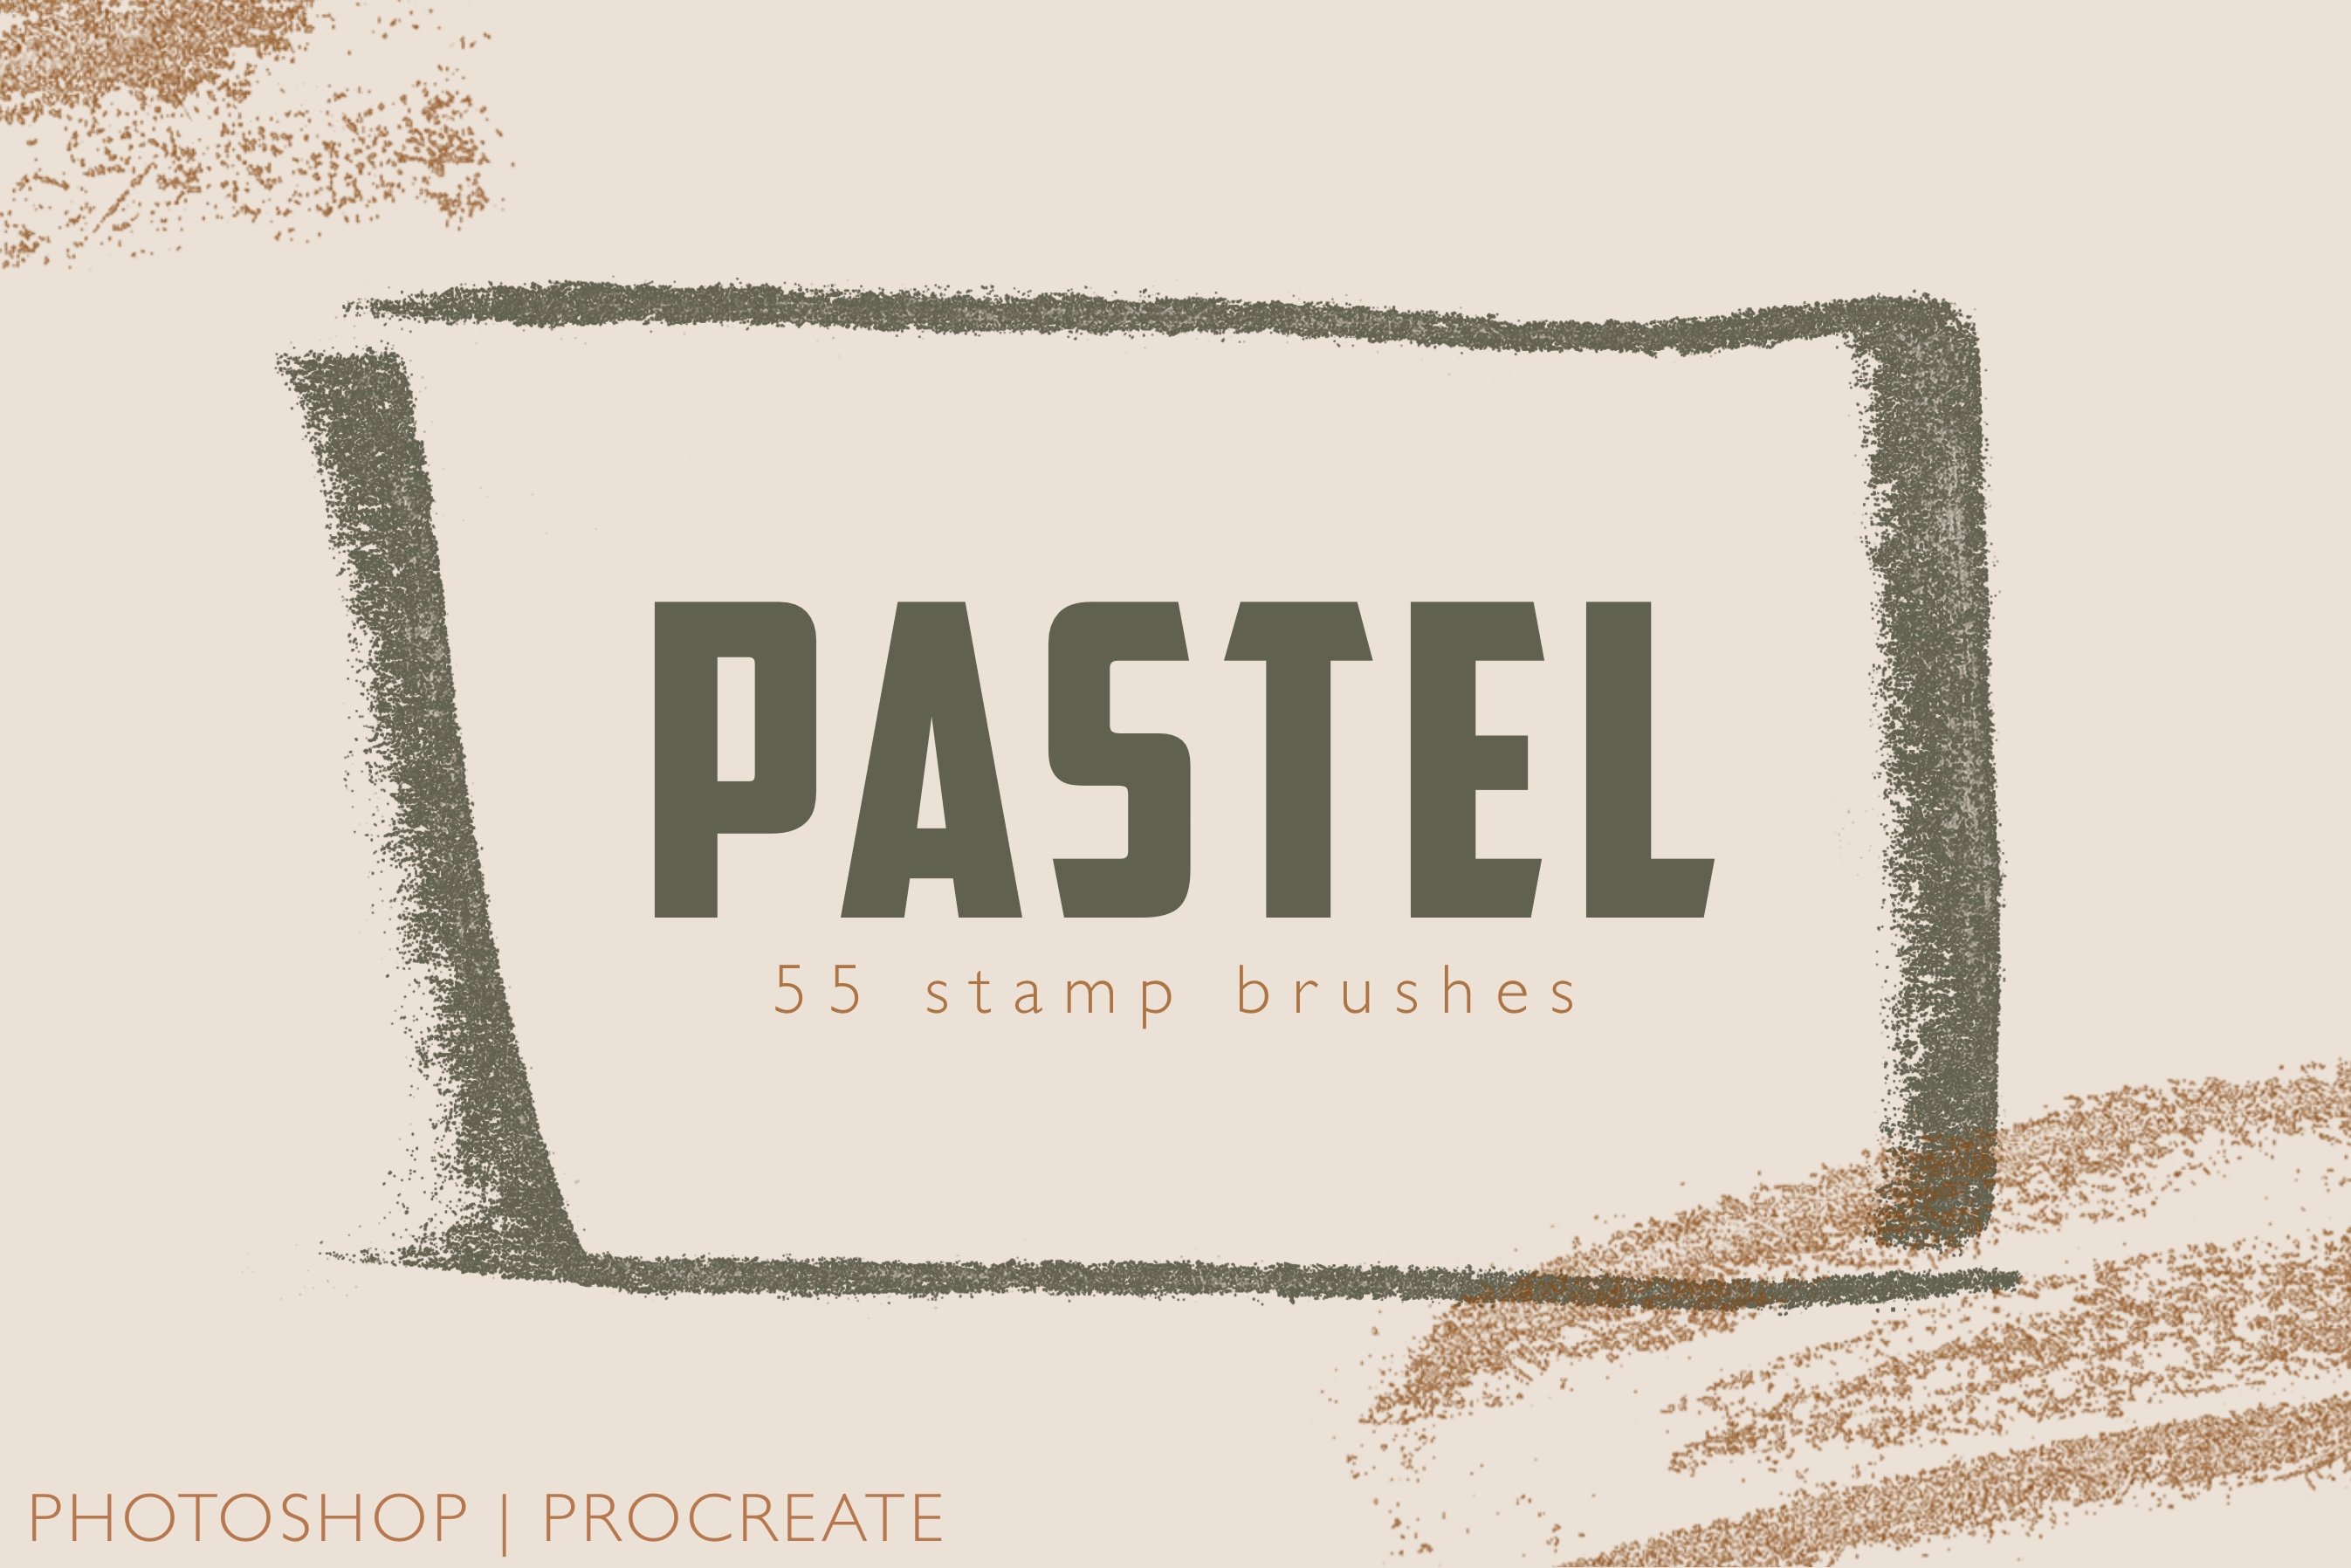 PASTEL stamps Photoshop/Procreatecover image.